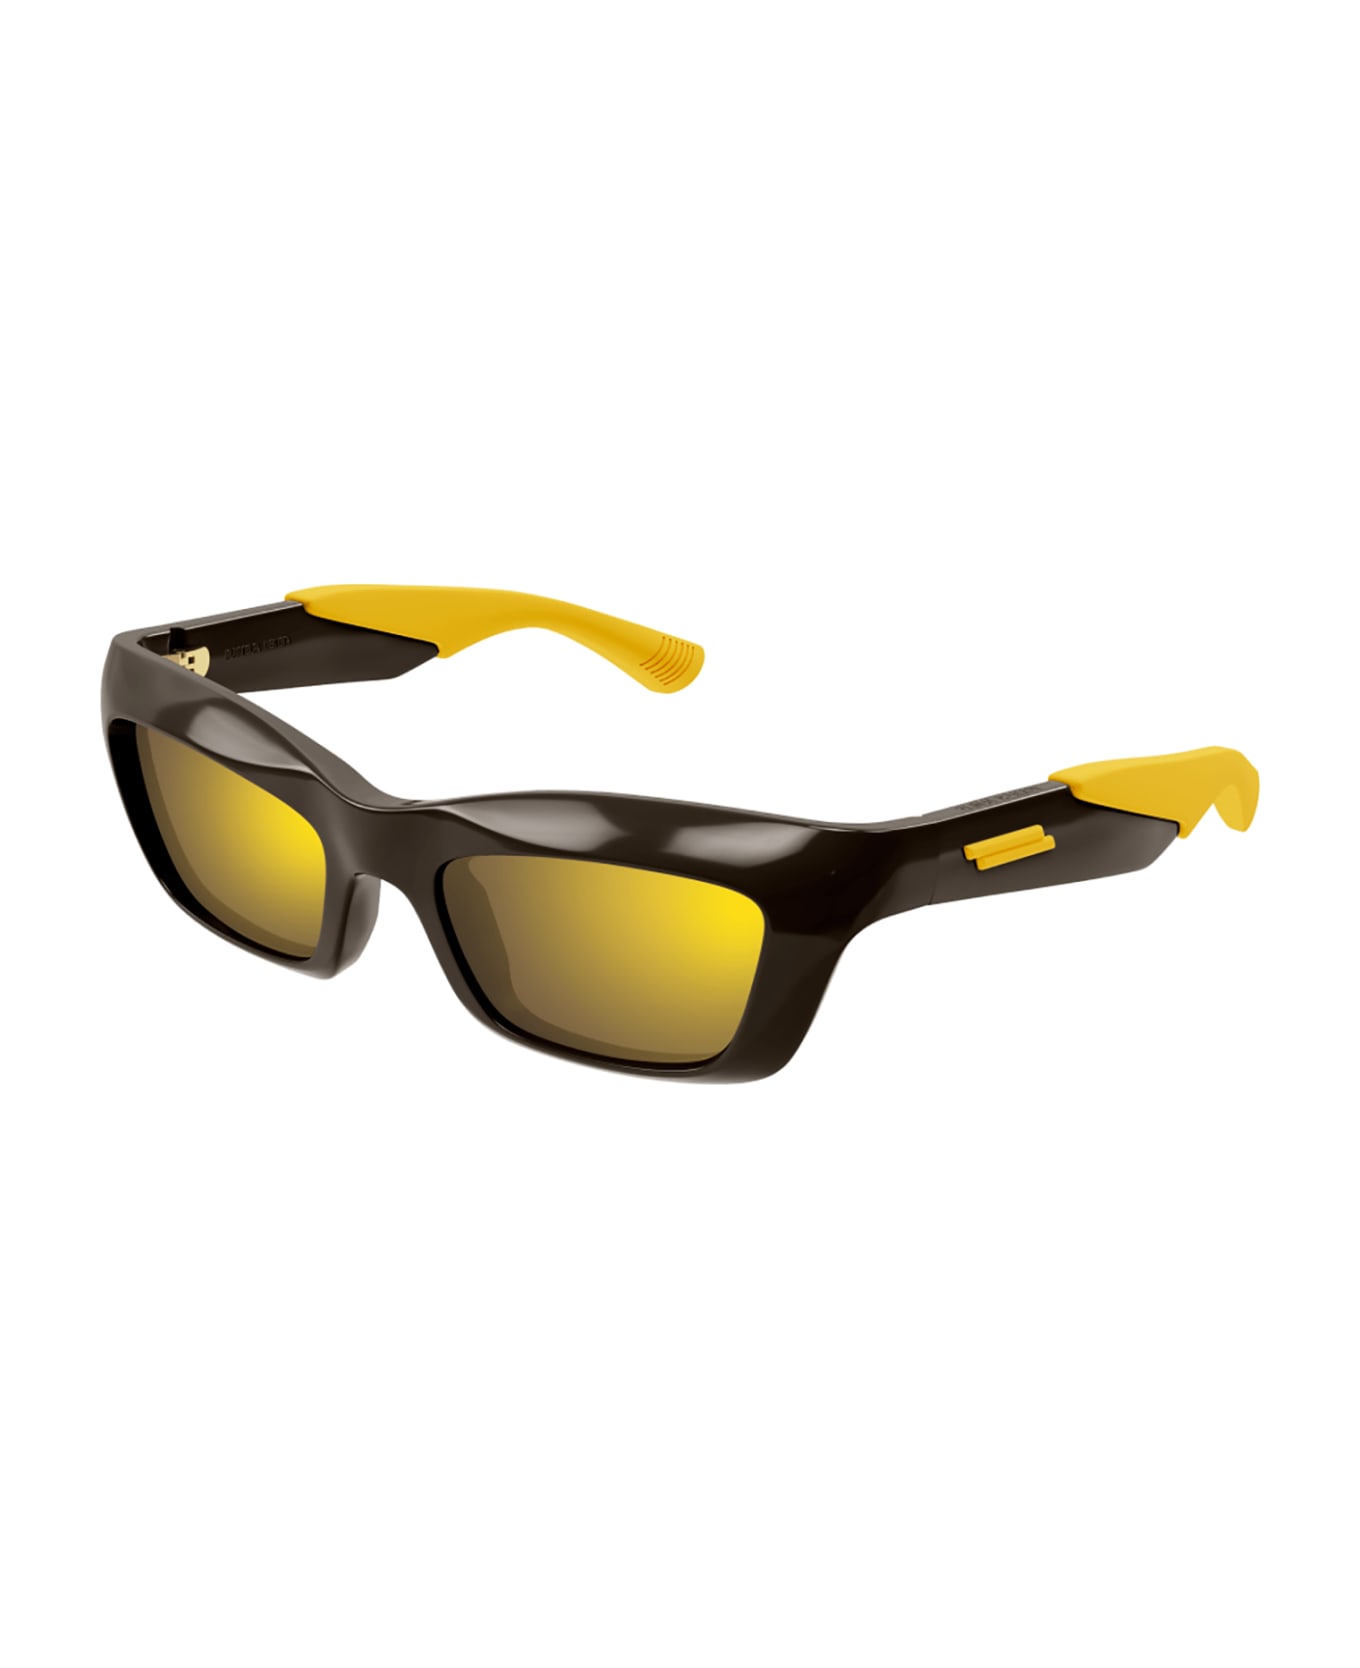 Bottega Veneta Eyewear 1e4c4id0a - Sunglasses Magician D2 0032 S 807T4